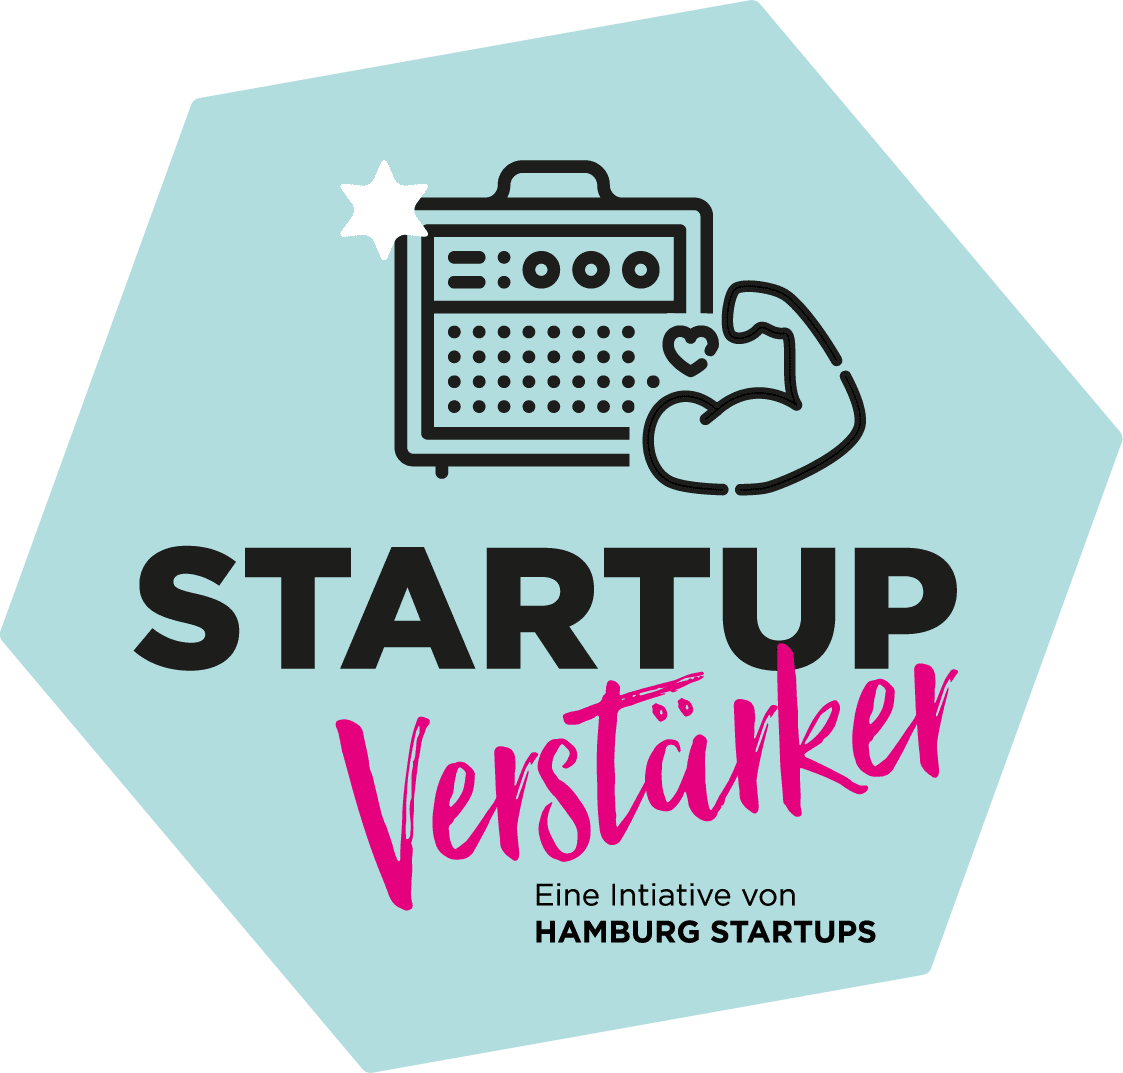 (c) Hamburg-startups.net